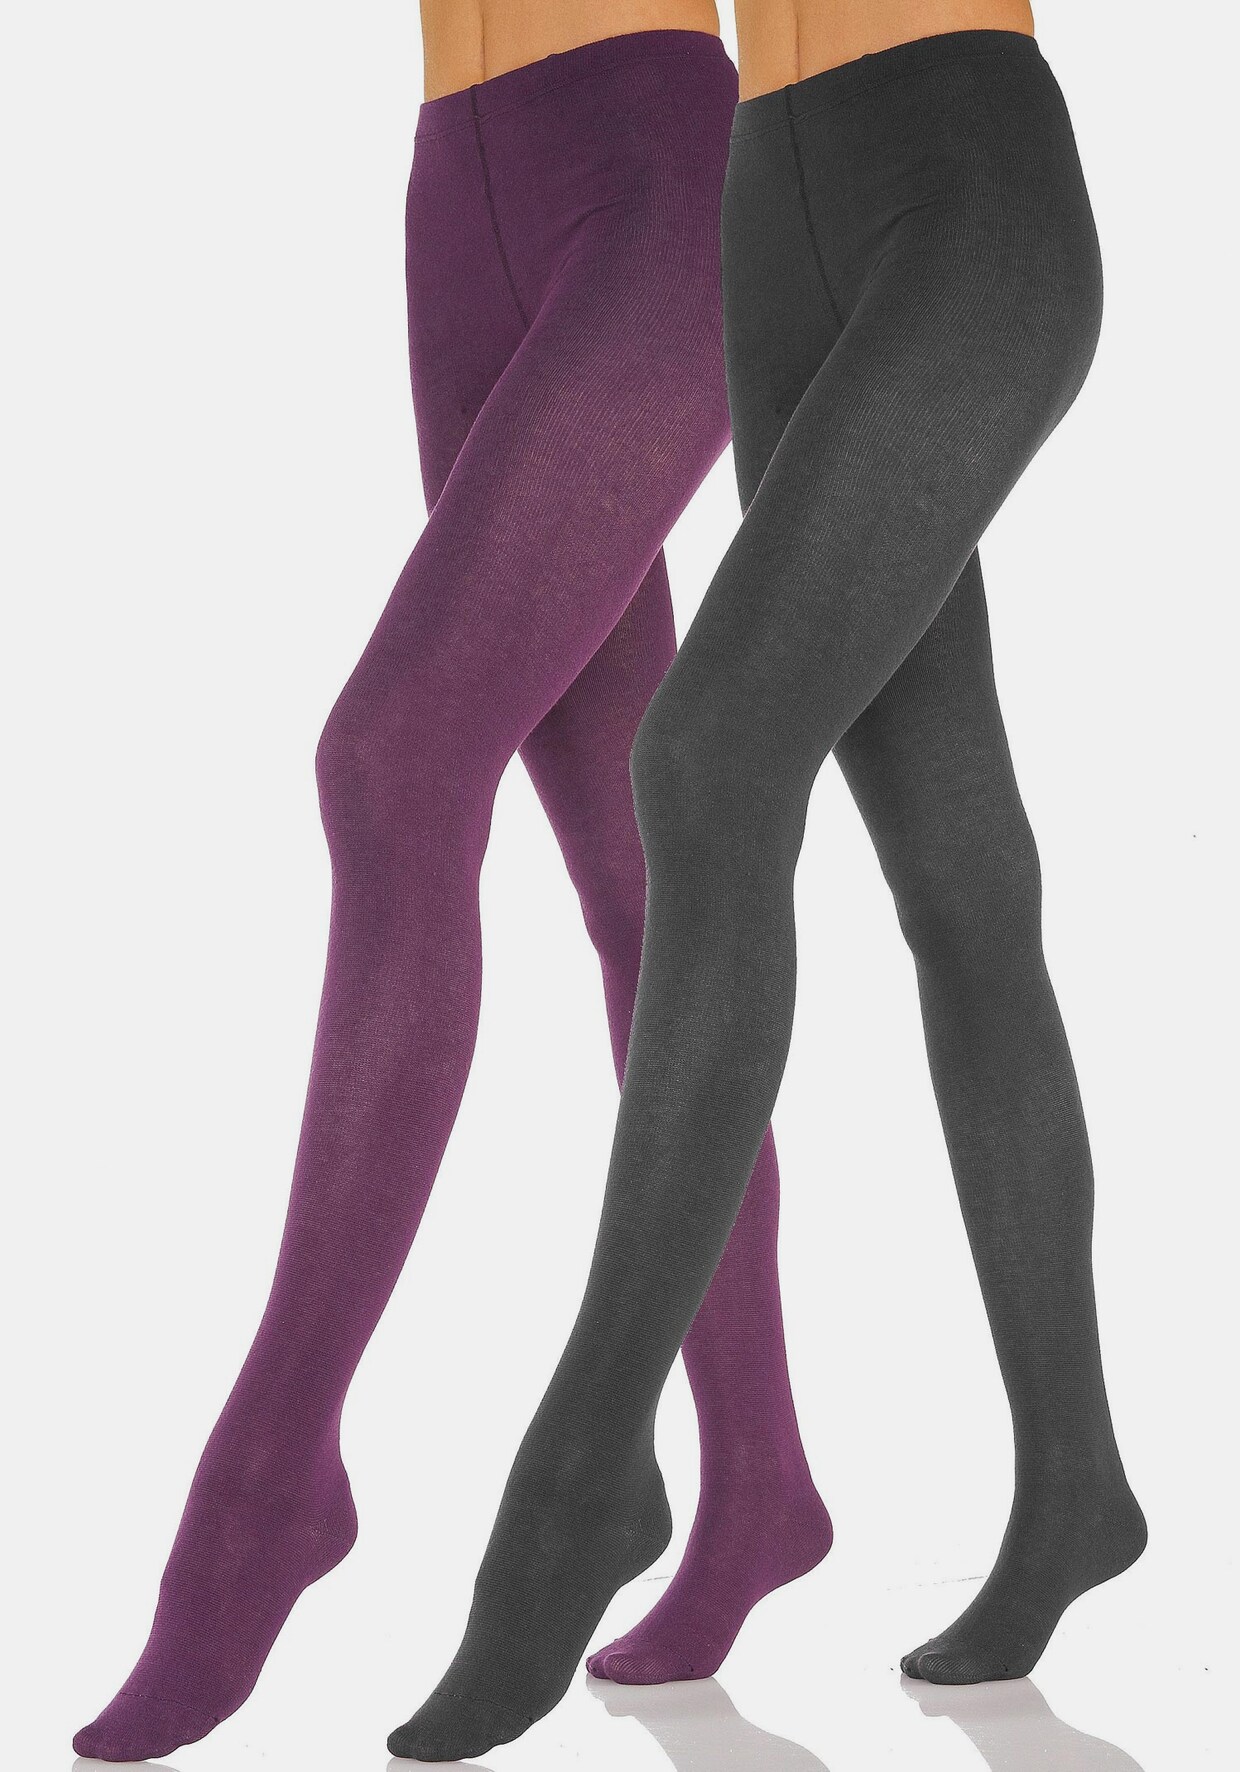 Rogo Strumpfhose - 1x violett-schwarz + 1x schwarz